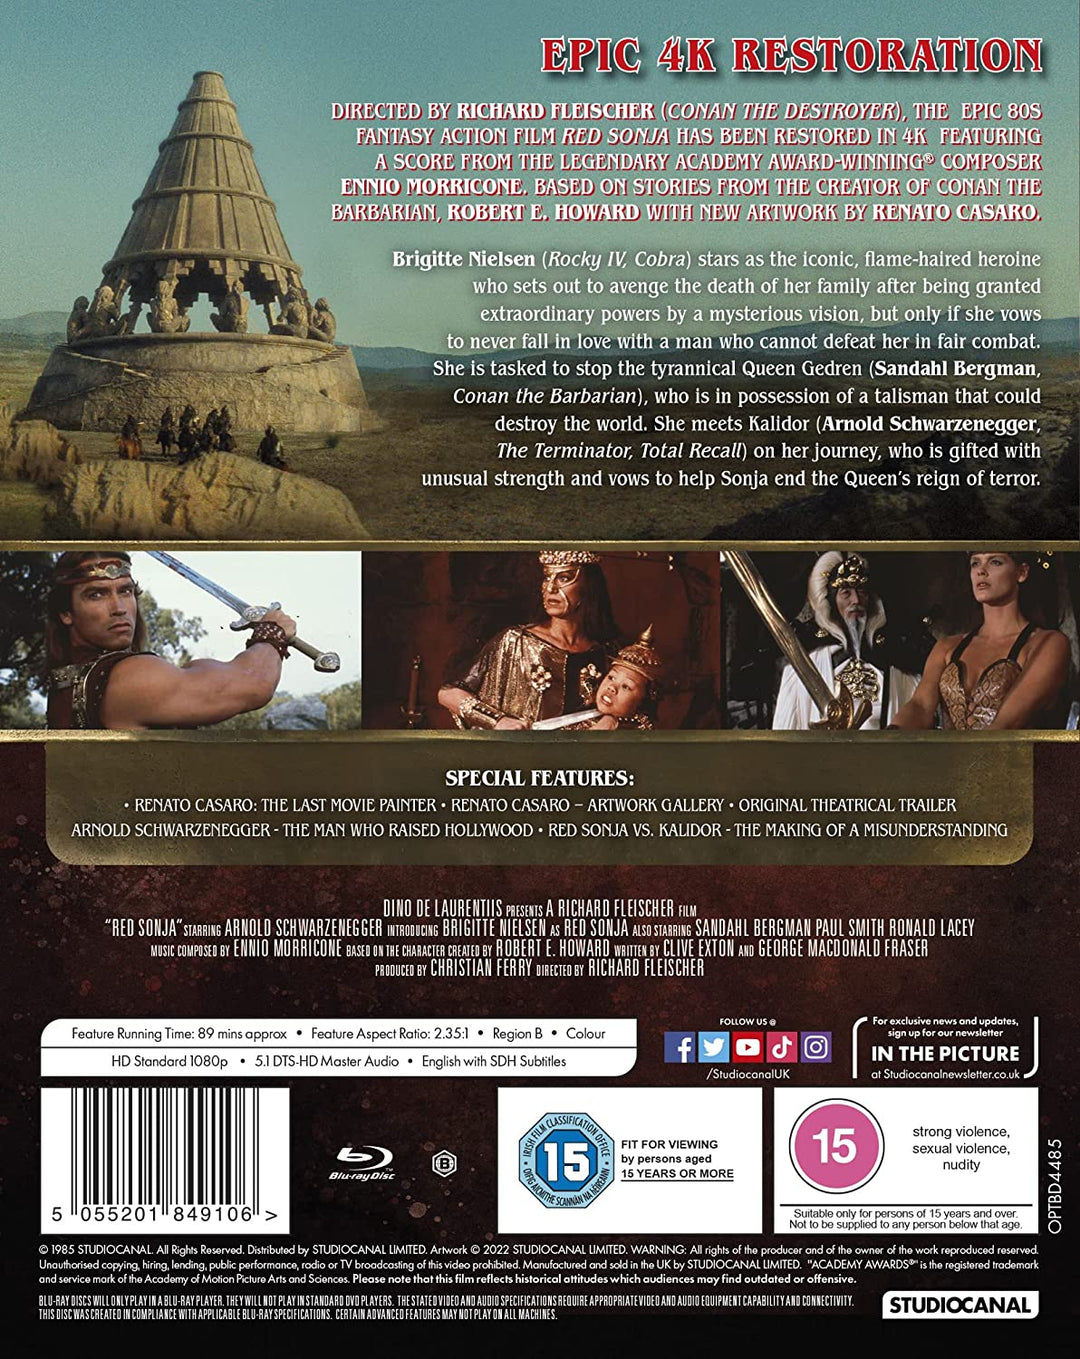 Red Sonja - Fantasy [Blu-ray]